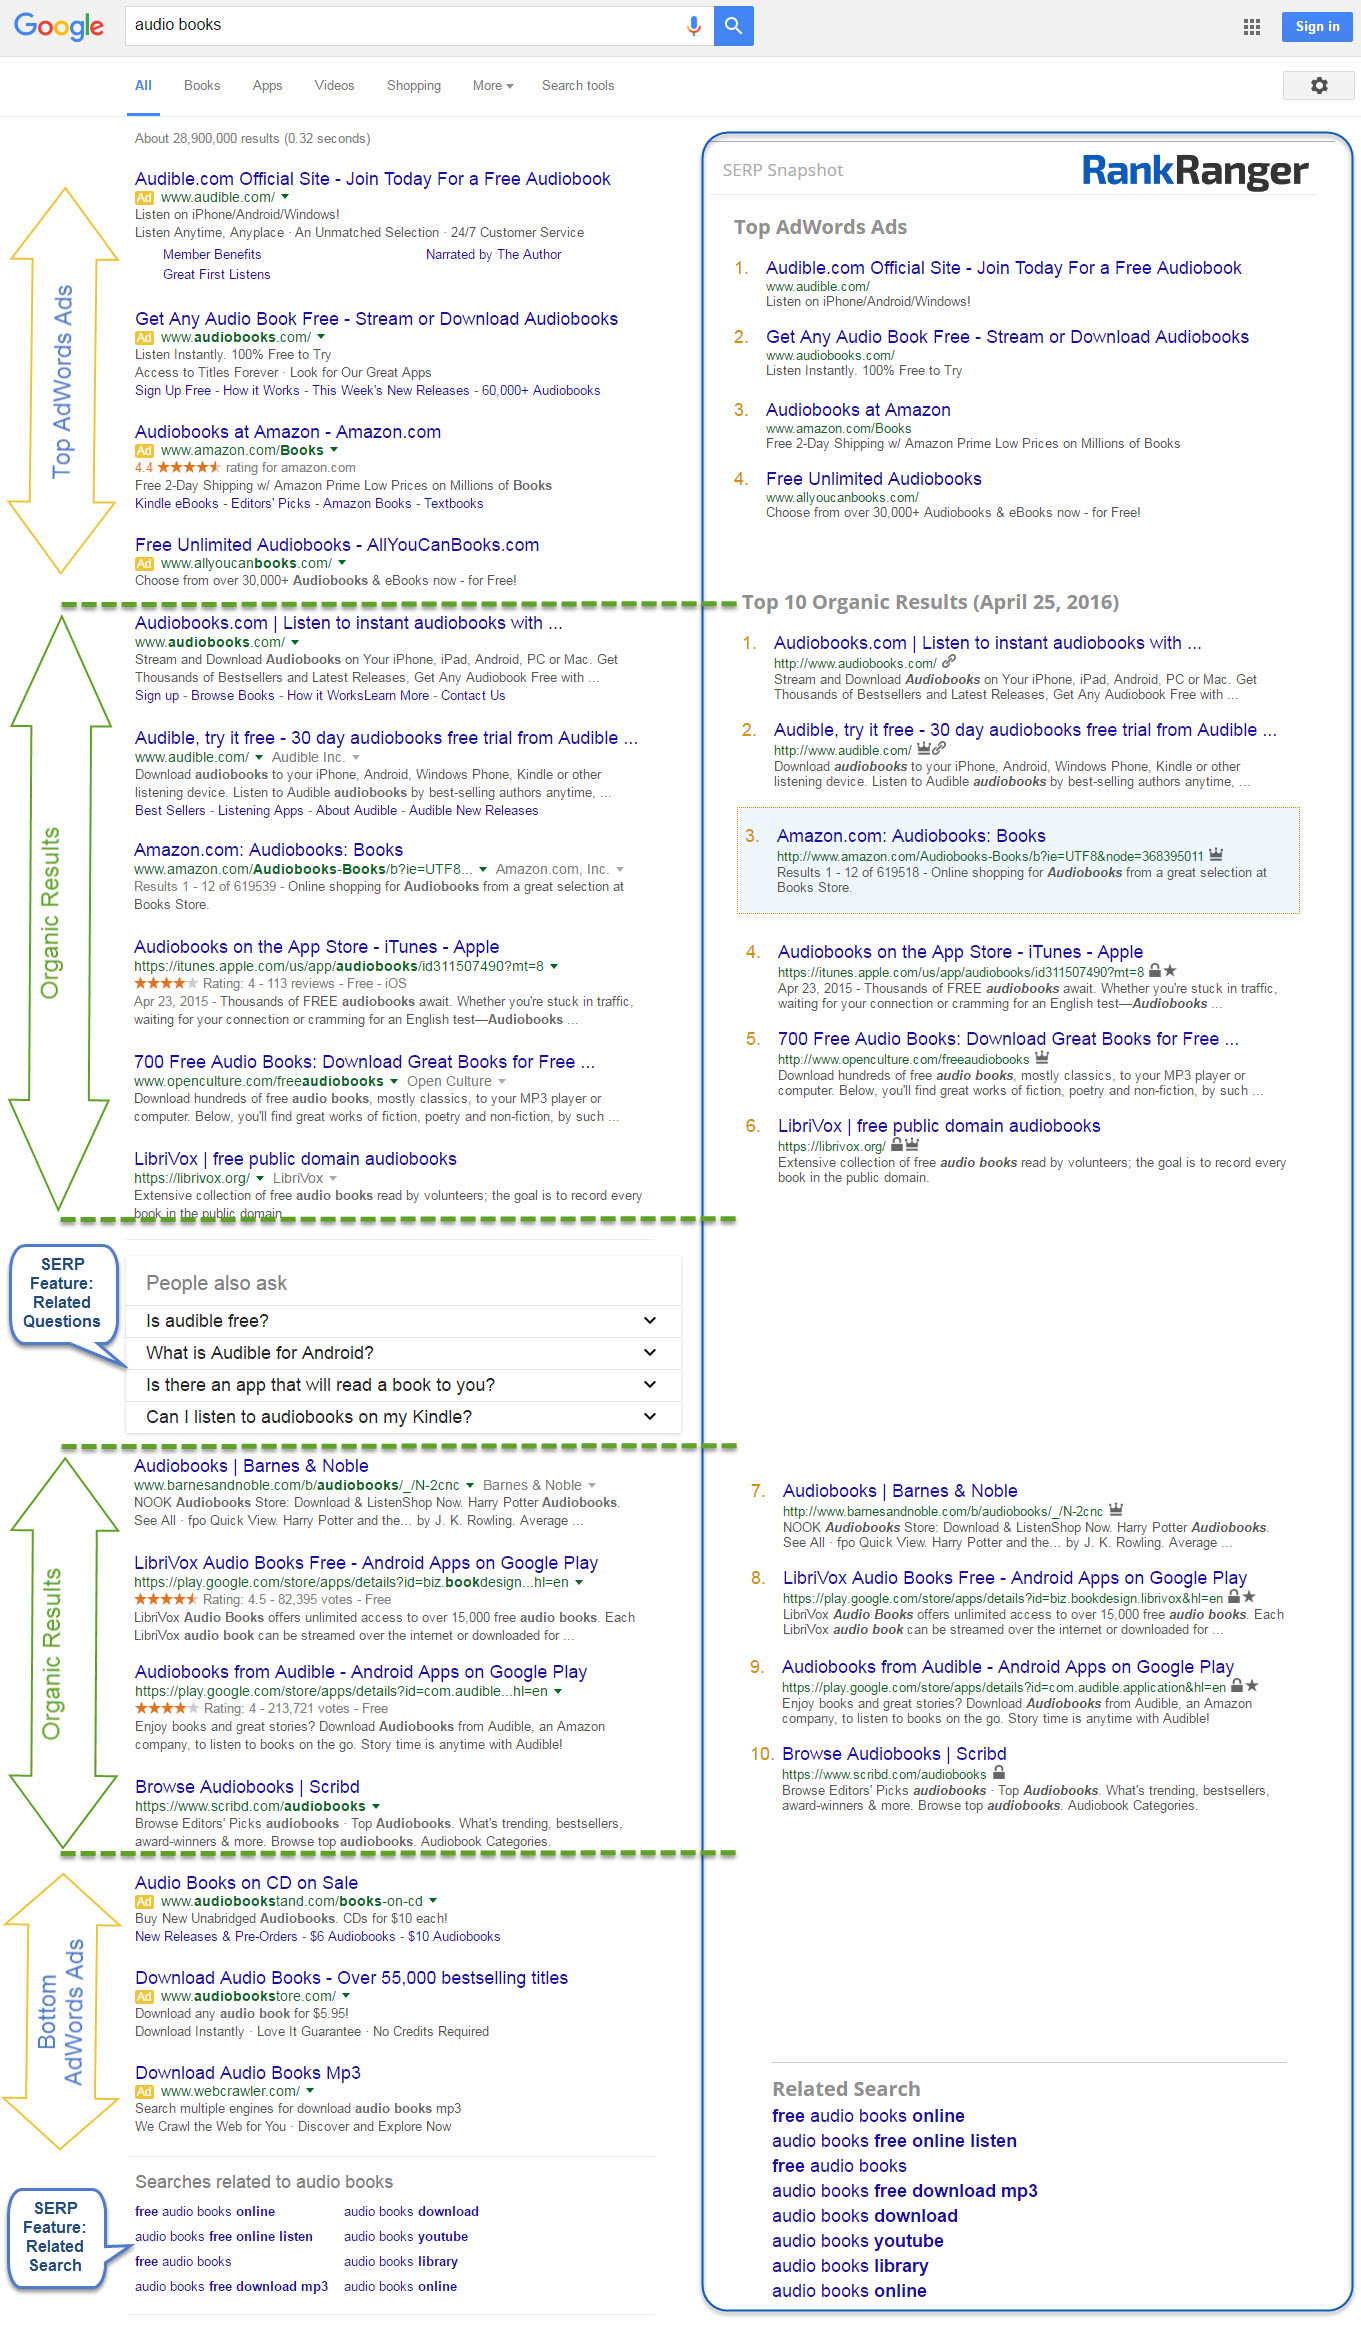 Anatomy of Google SERPs